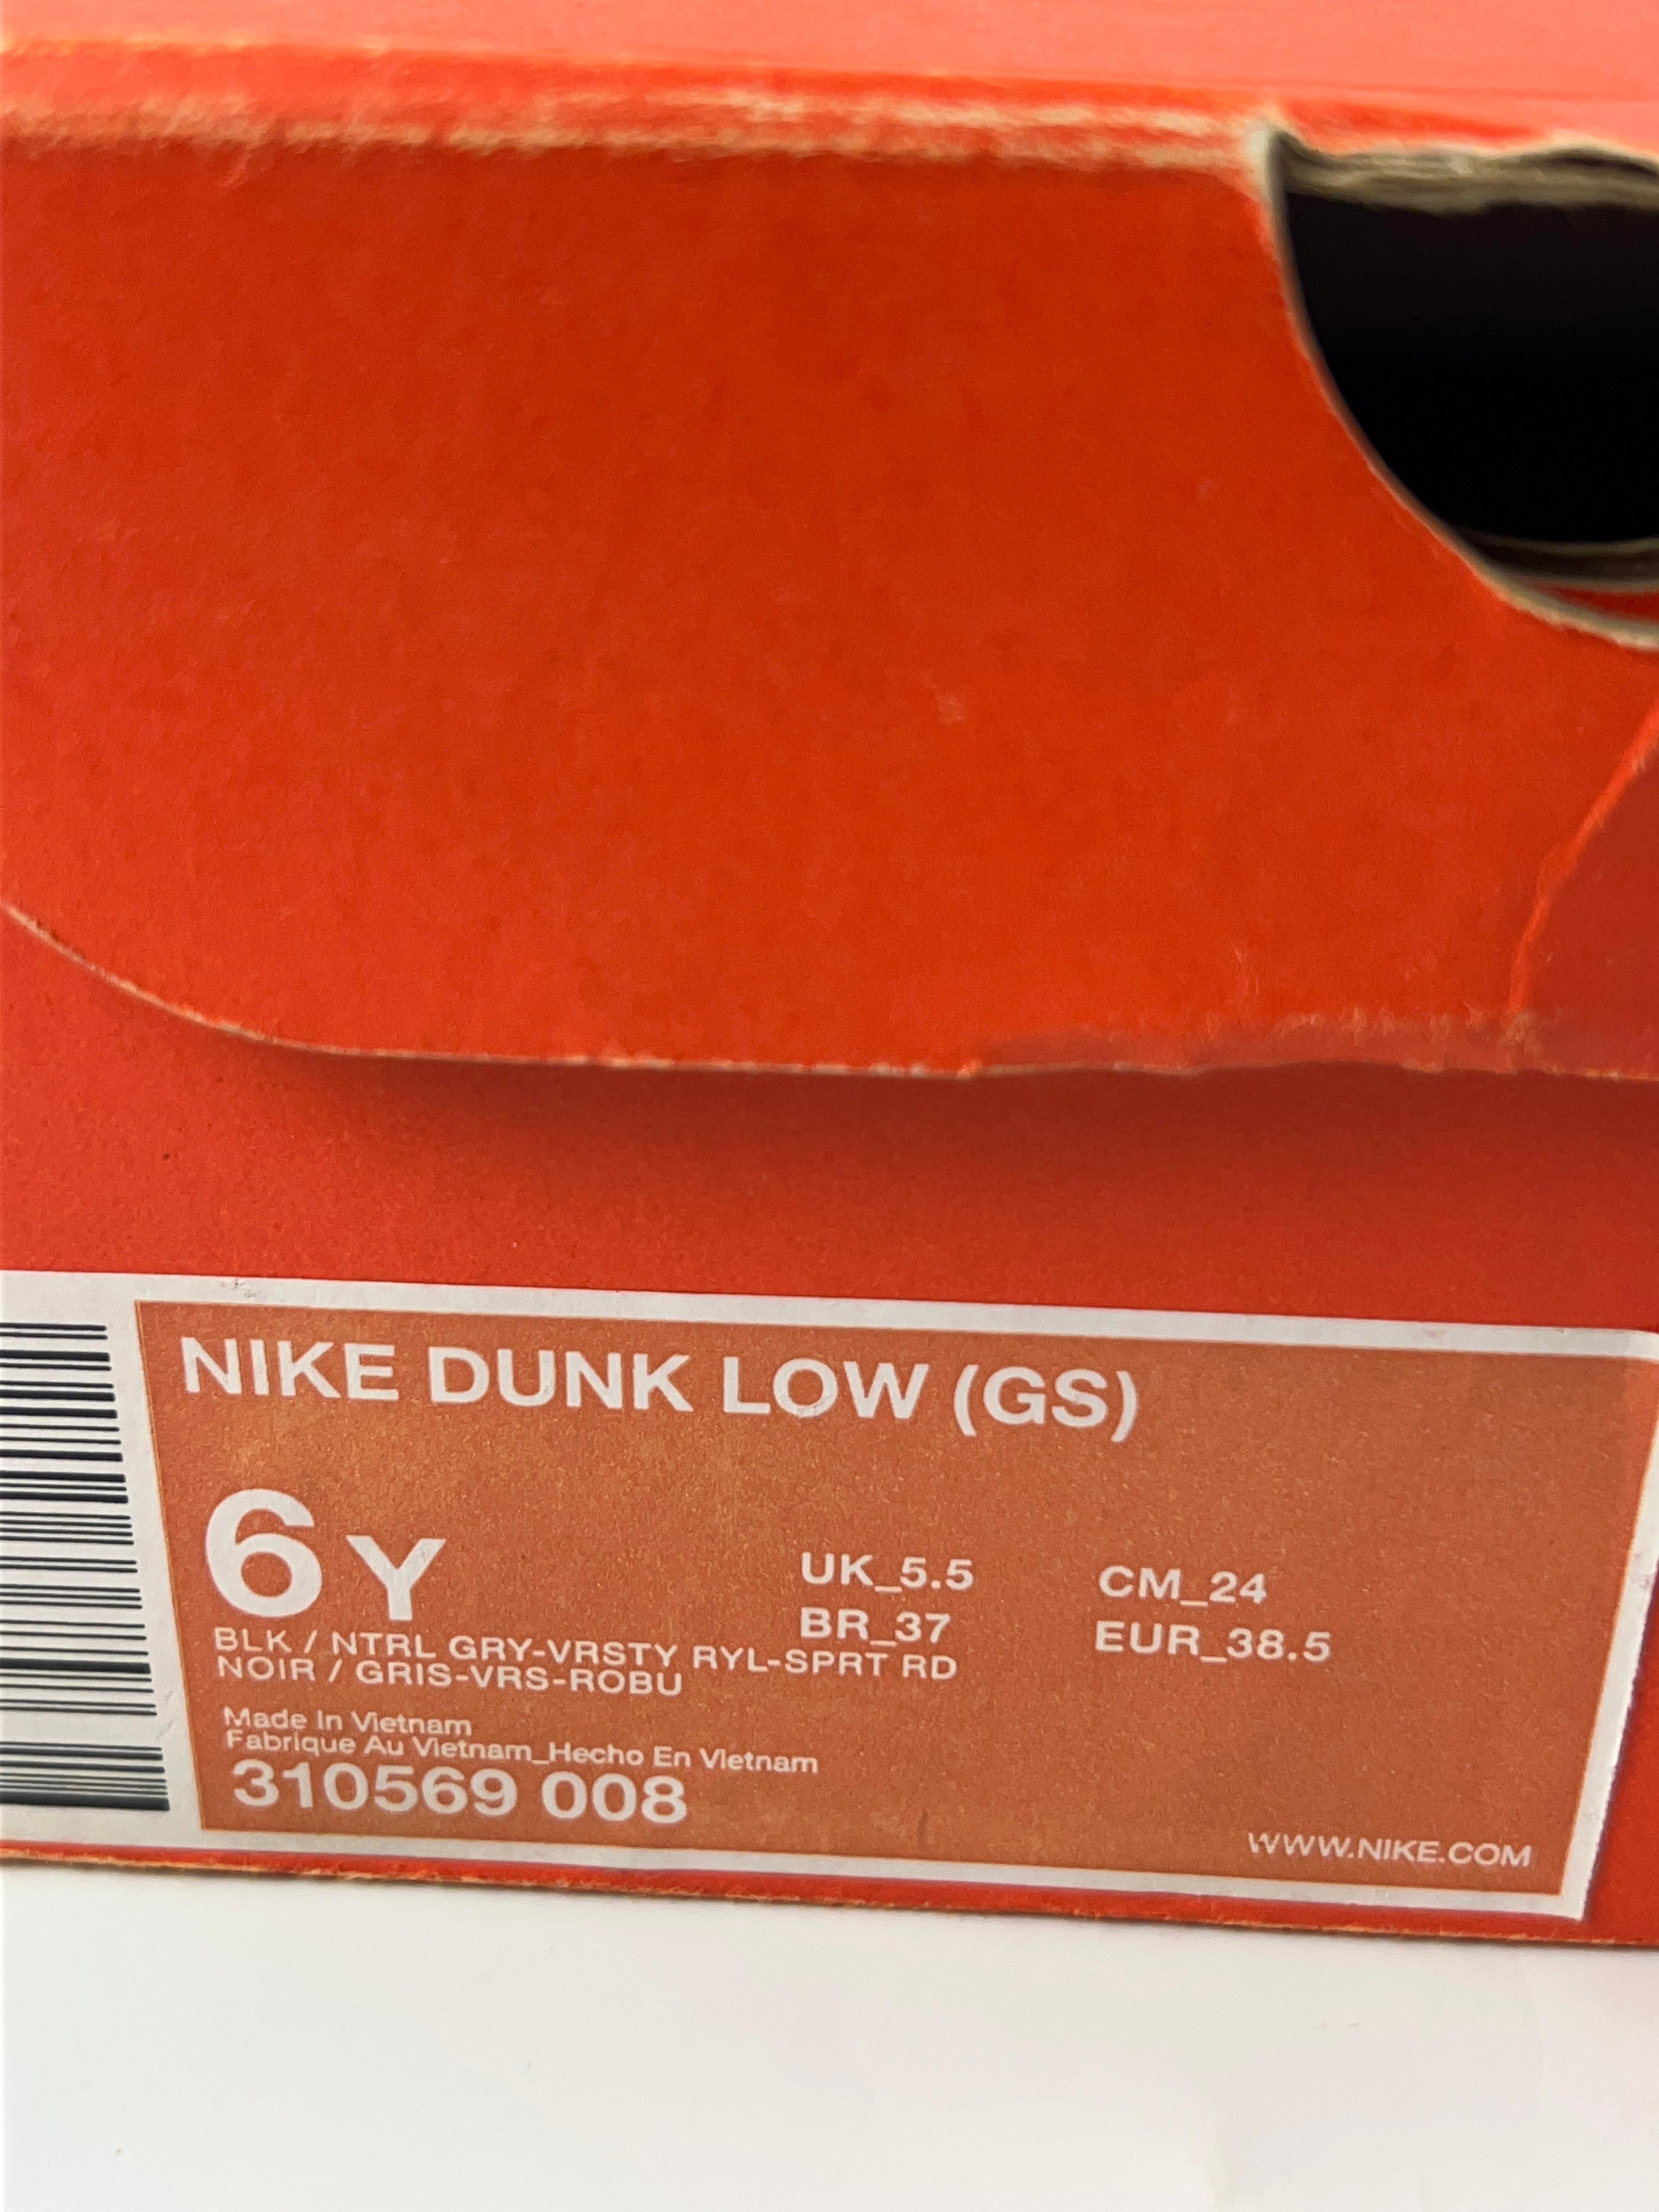 Alternate View 12 of 2007 Nike Dunk Low GS Black/Royal Shoes 310569-008 Kid 6y Women 